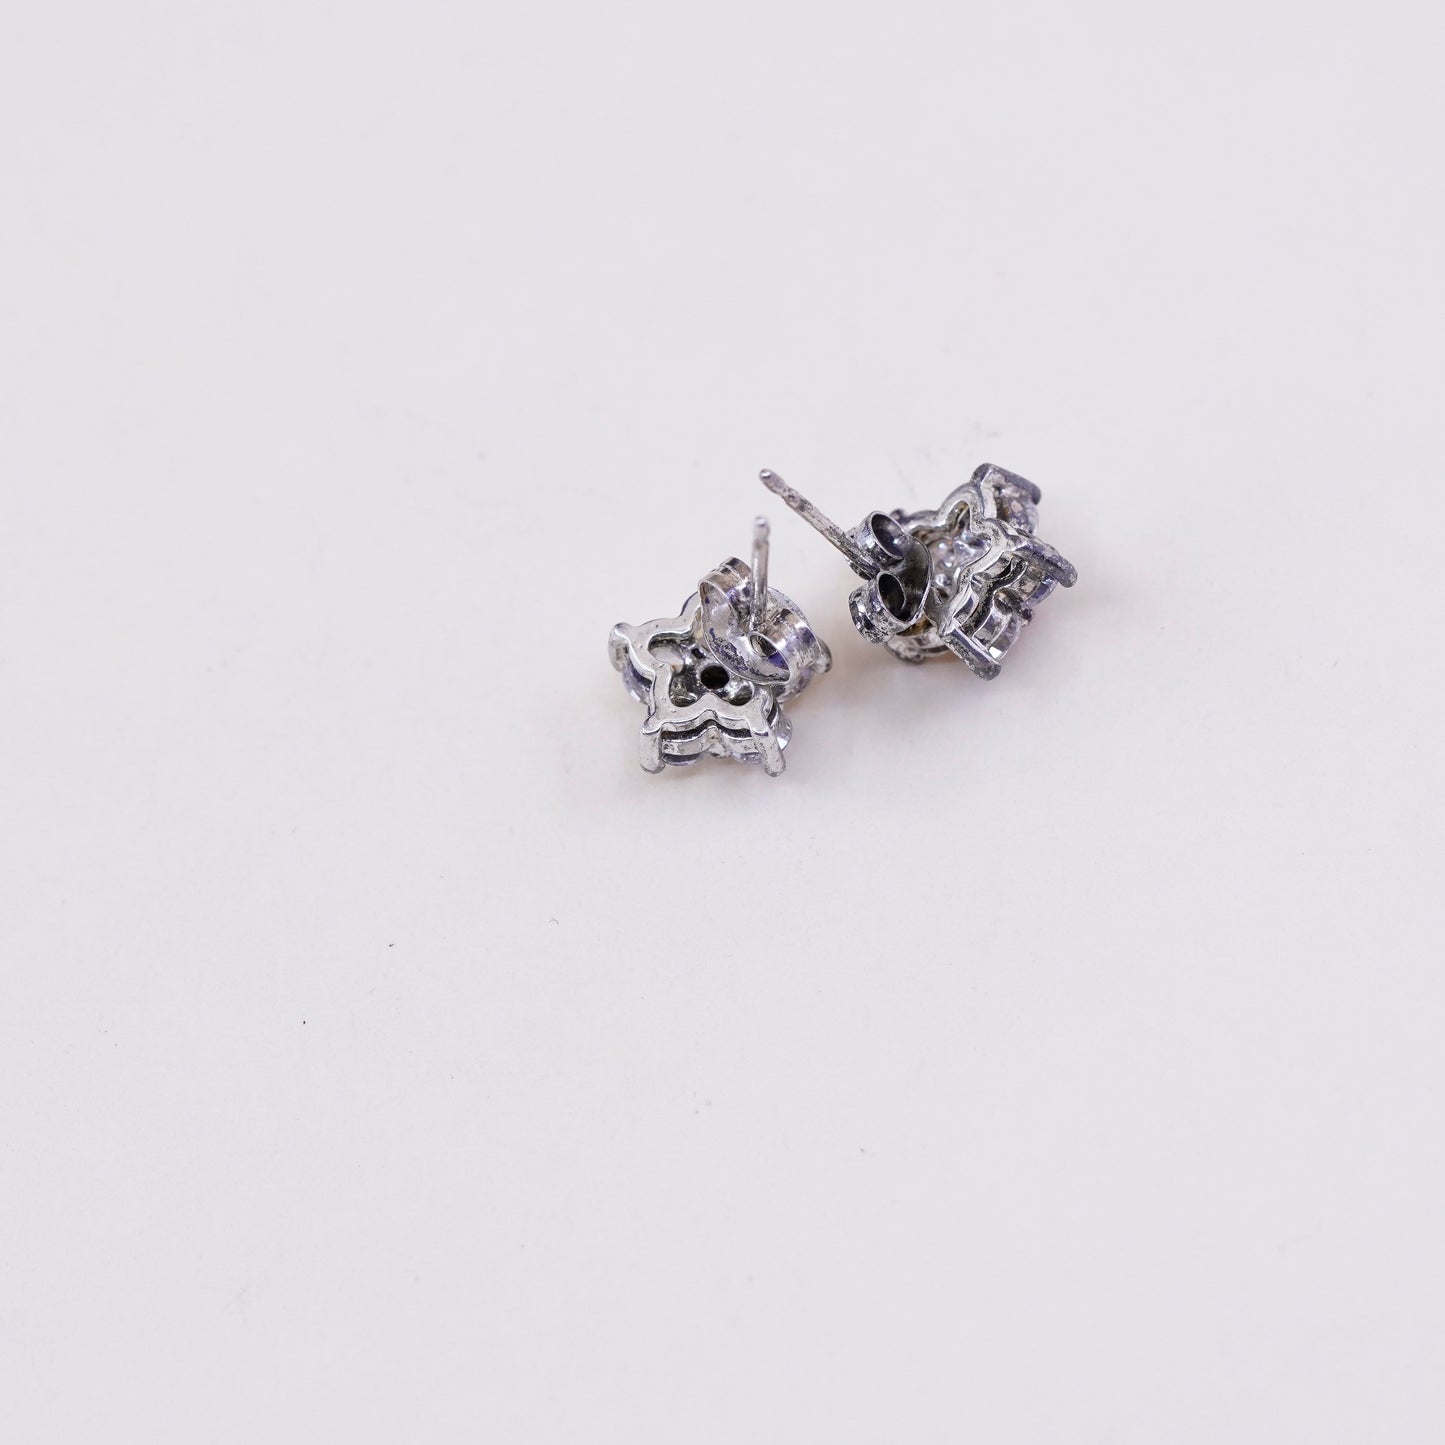 Vintage Sterling silver handmade earrings, 925 flower studs with cz